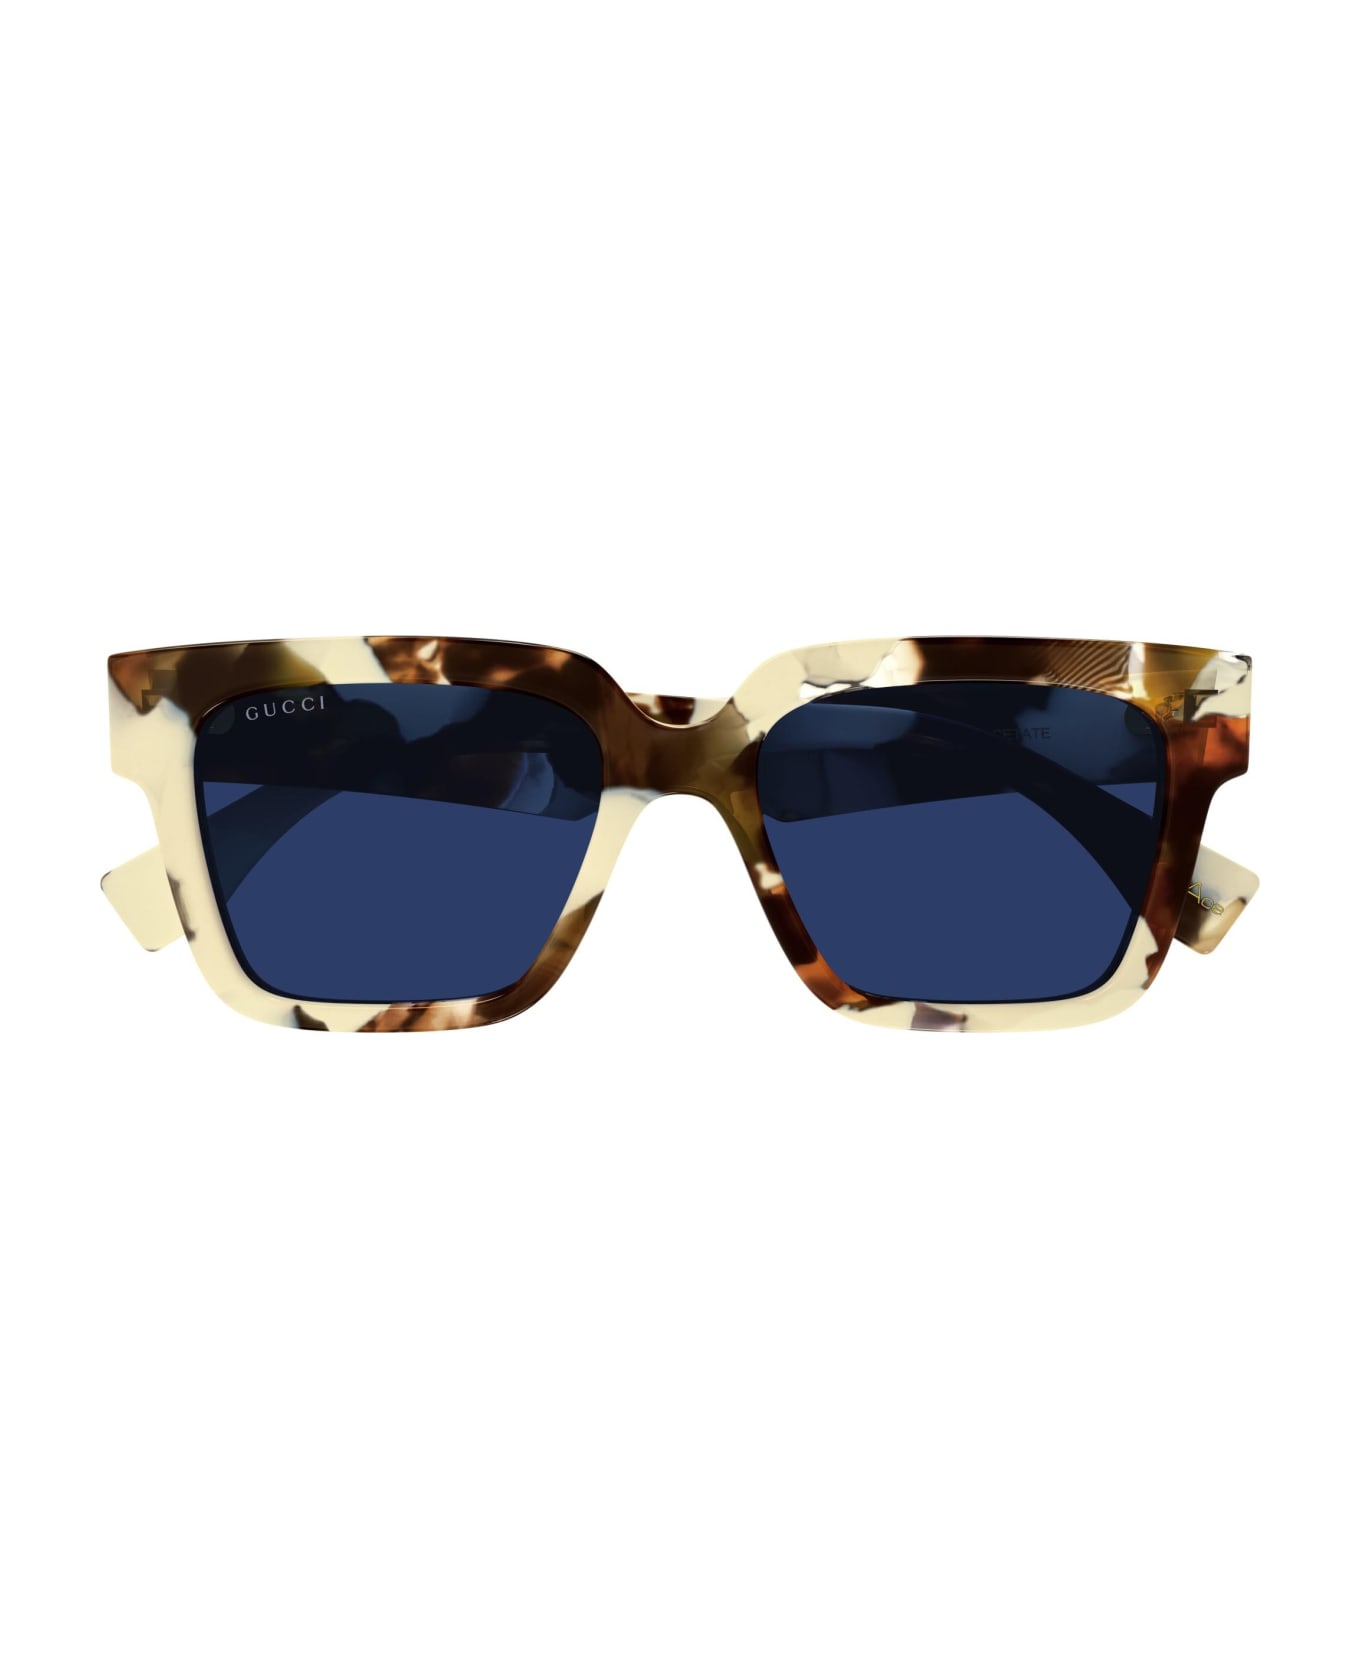 Gucci Eyewear Sunglasses - Havana chiaro/Blu